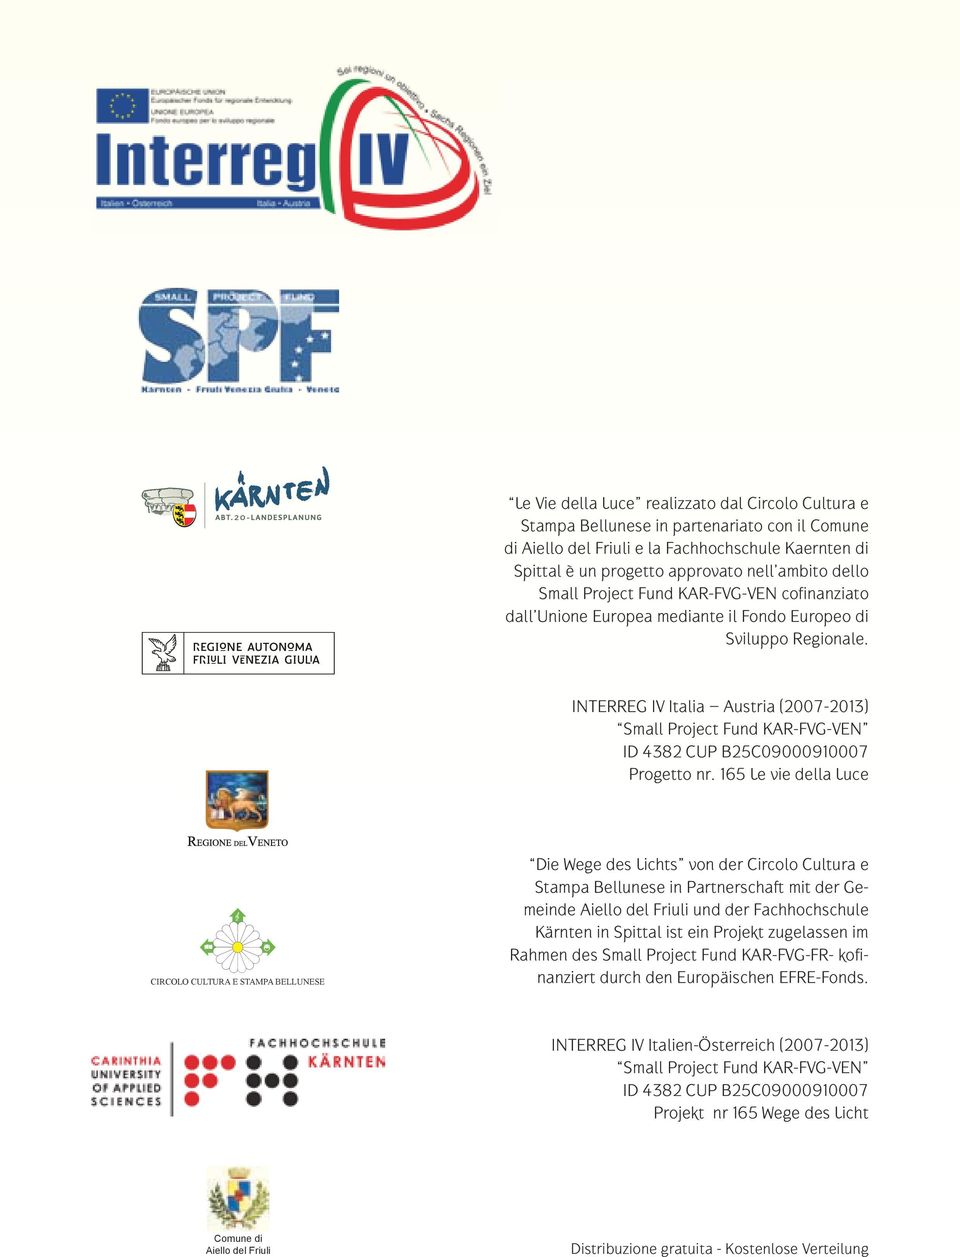 INTERREG IV Italia Austria (2007-2013) Small Project Fund KAR-FVG-VEN ID 4382 CUP B25C09000910007 Progetto nr.